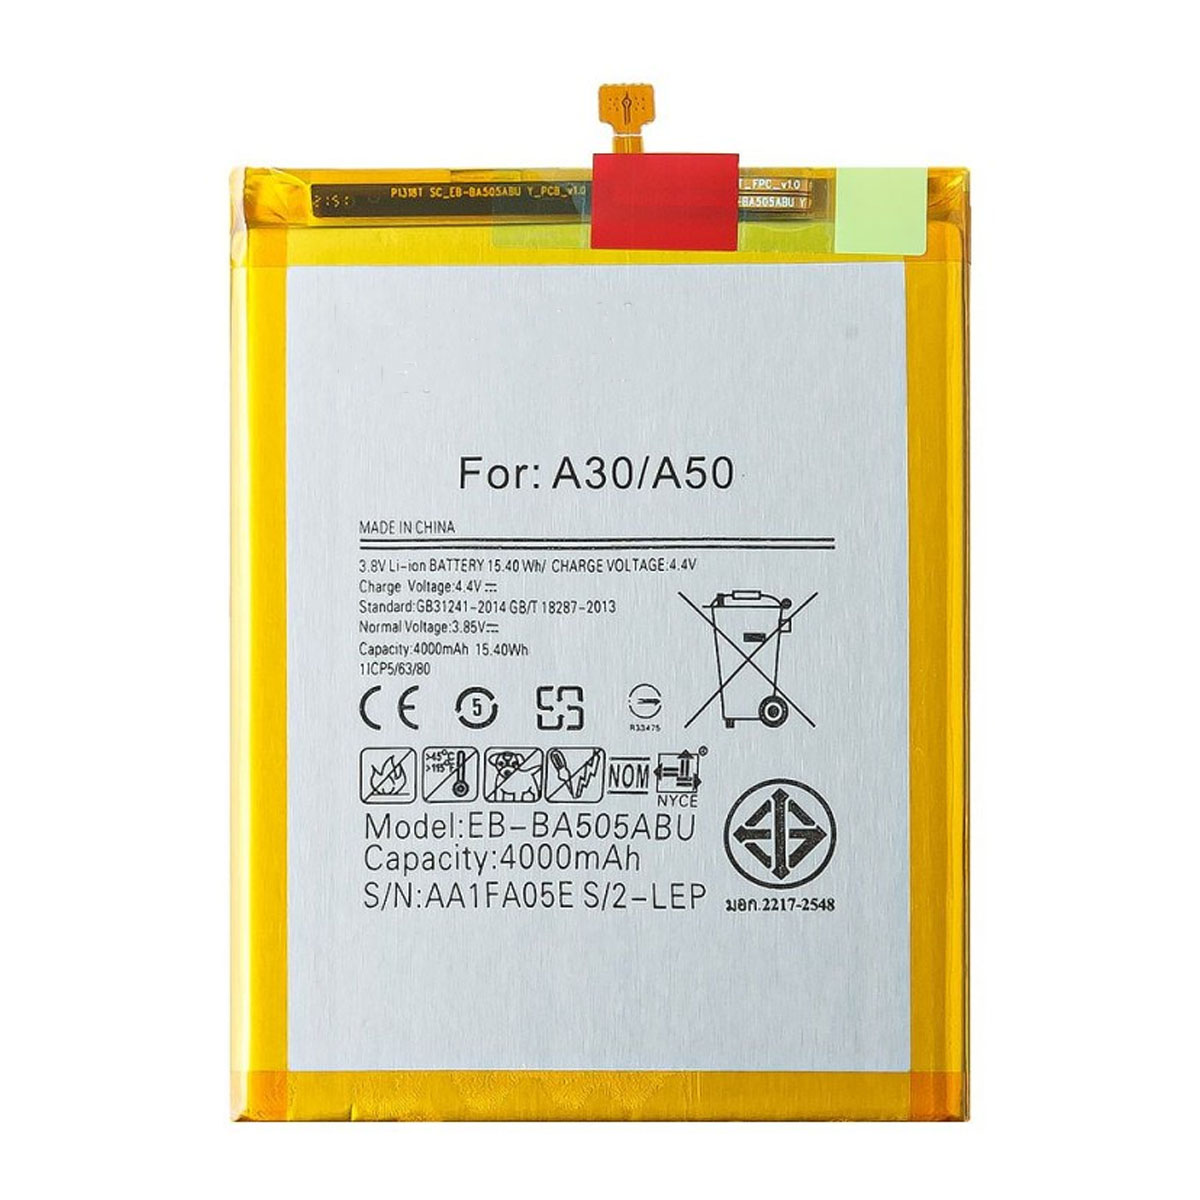 АКБ (Аккумулятор) EB-BA505ABU для SAMSUNG Galaxy A50, A30, A20, A20S, A30S, A50S, 4000mAh, 3.85V